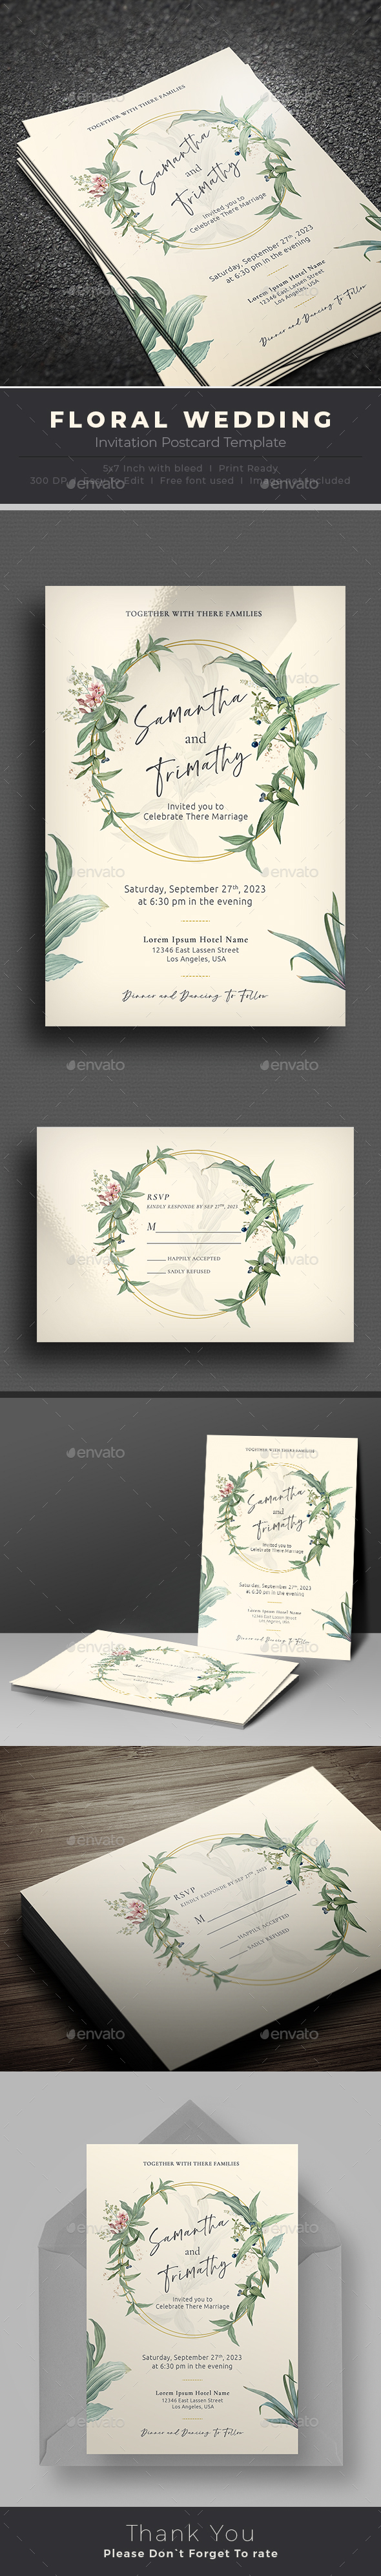 [DOWNLOAD]Floral Wedding Invitation